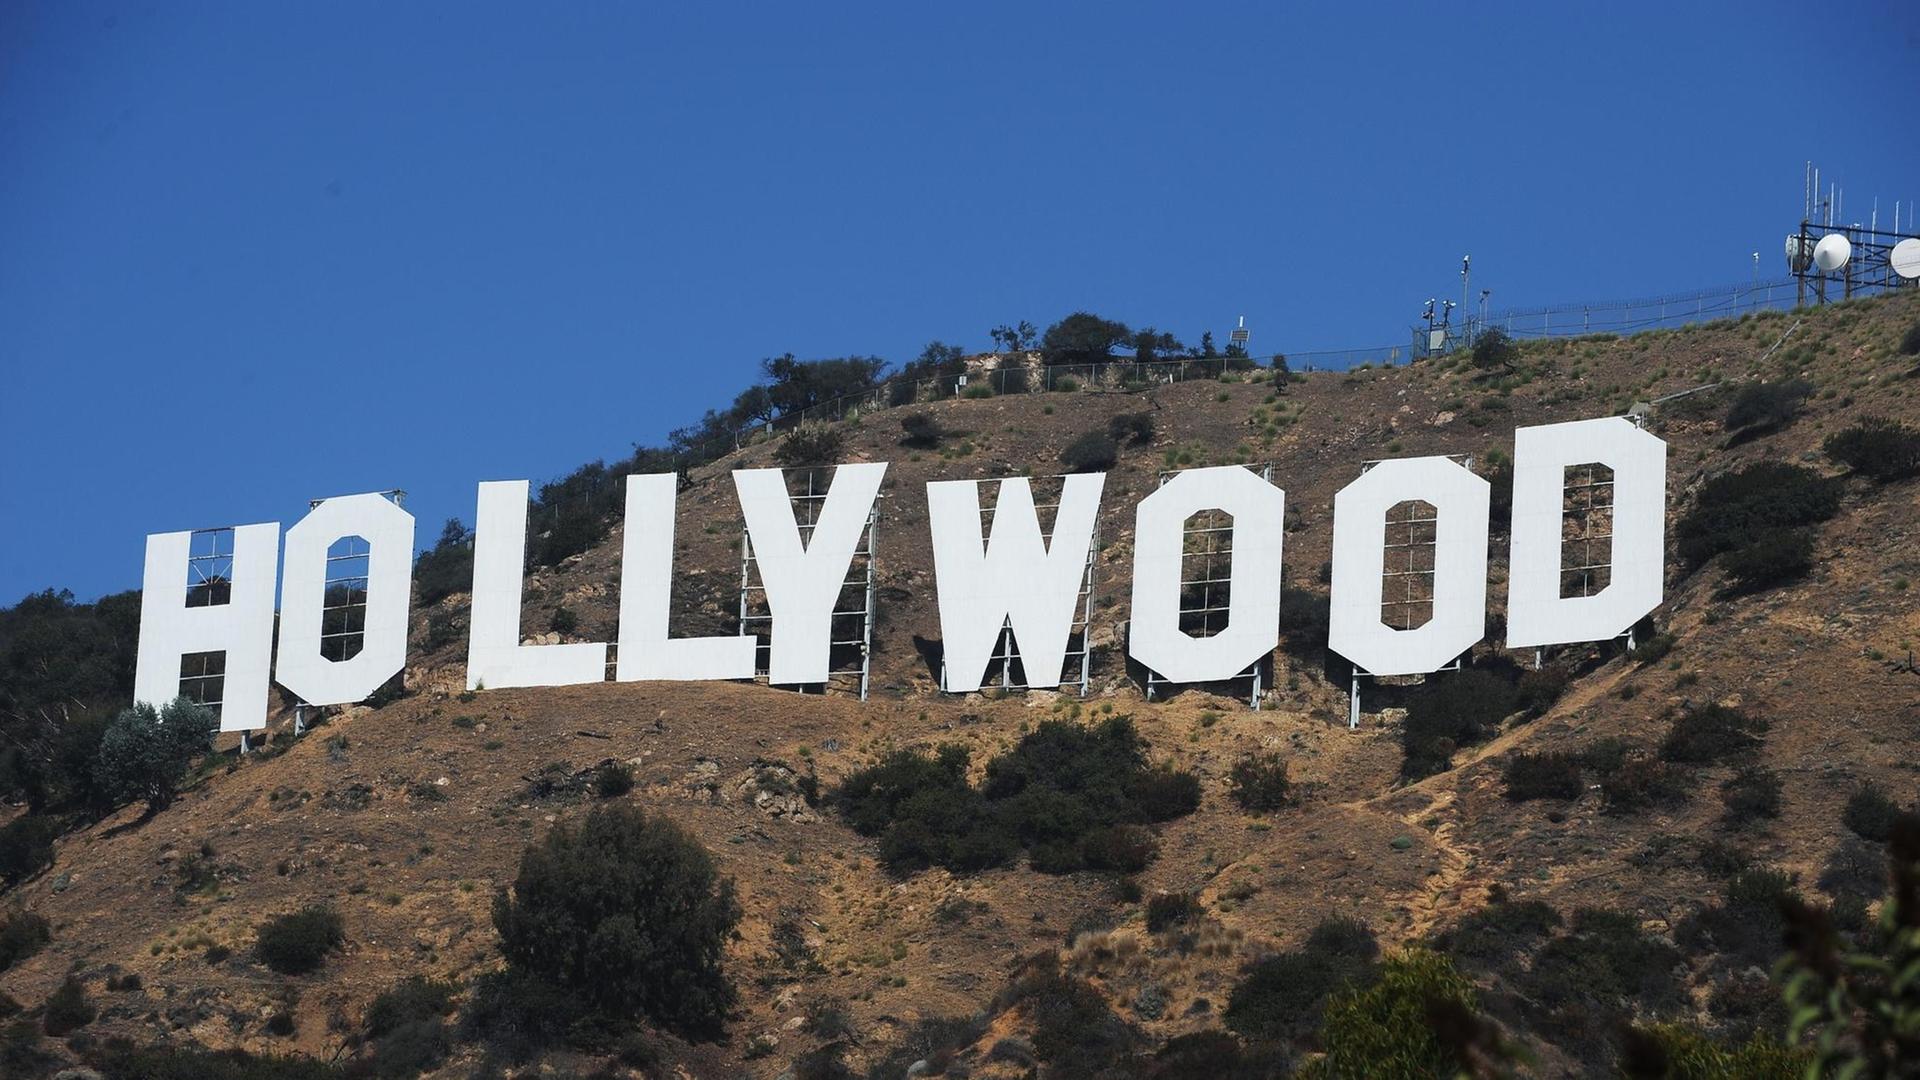 Hollywood Sign in den Hollywood Hills